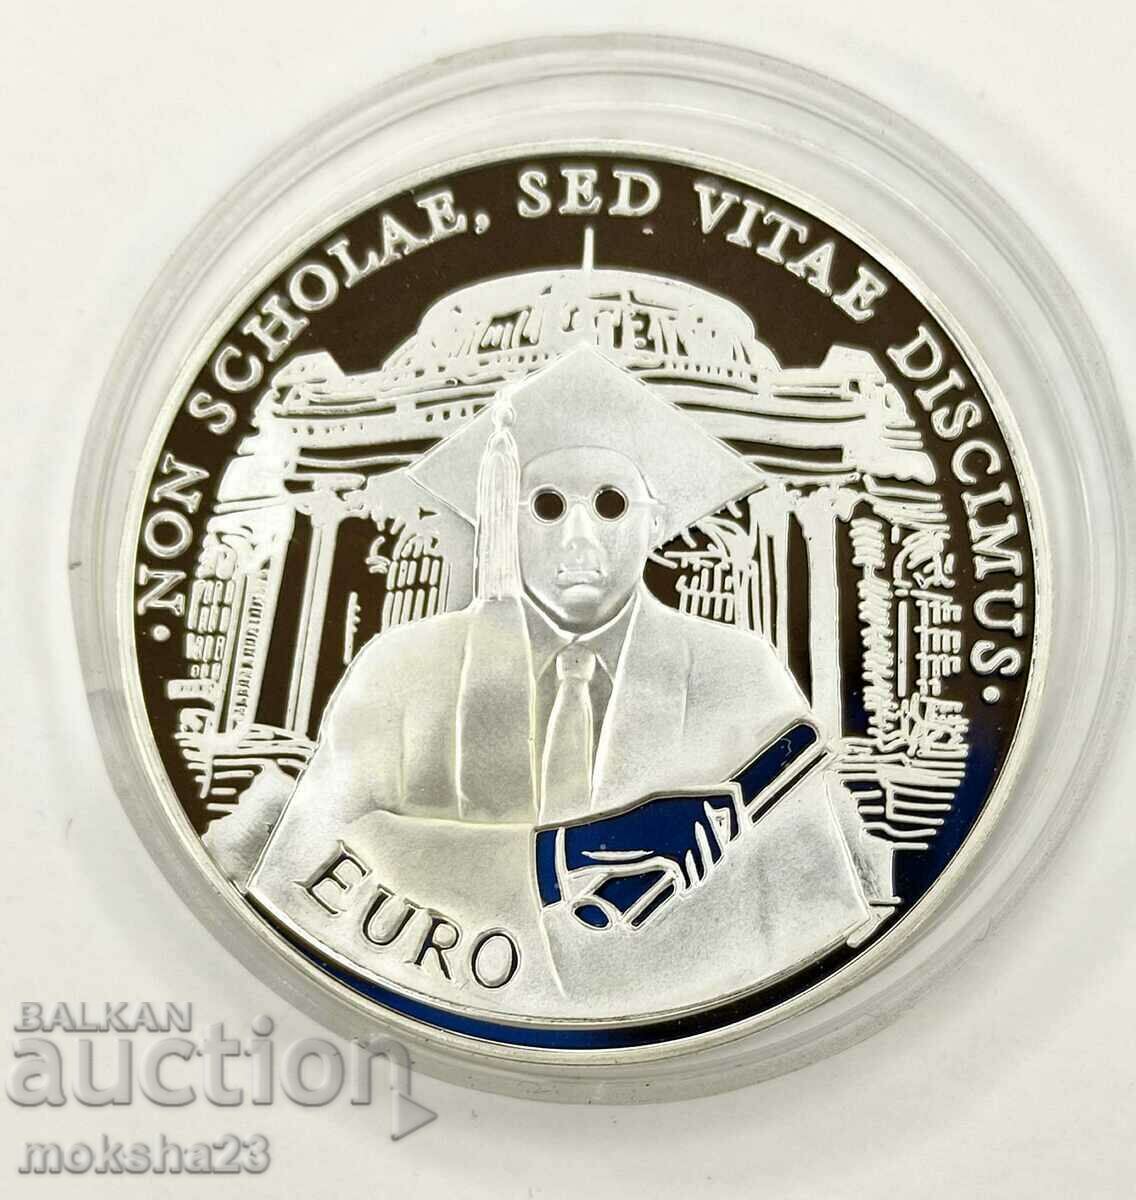 Silver Coin 10 BGN "Bulgarian Higher Education", Schol